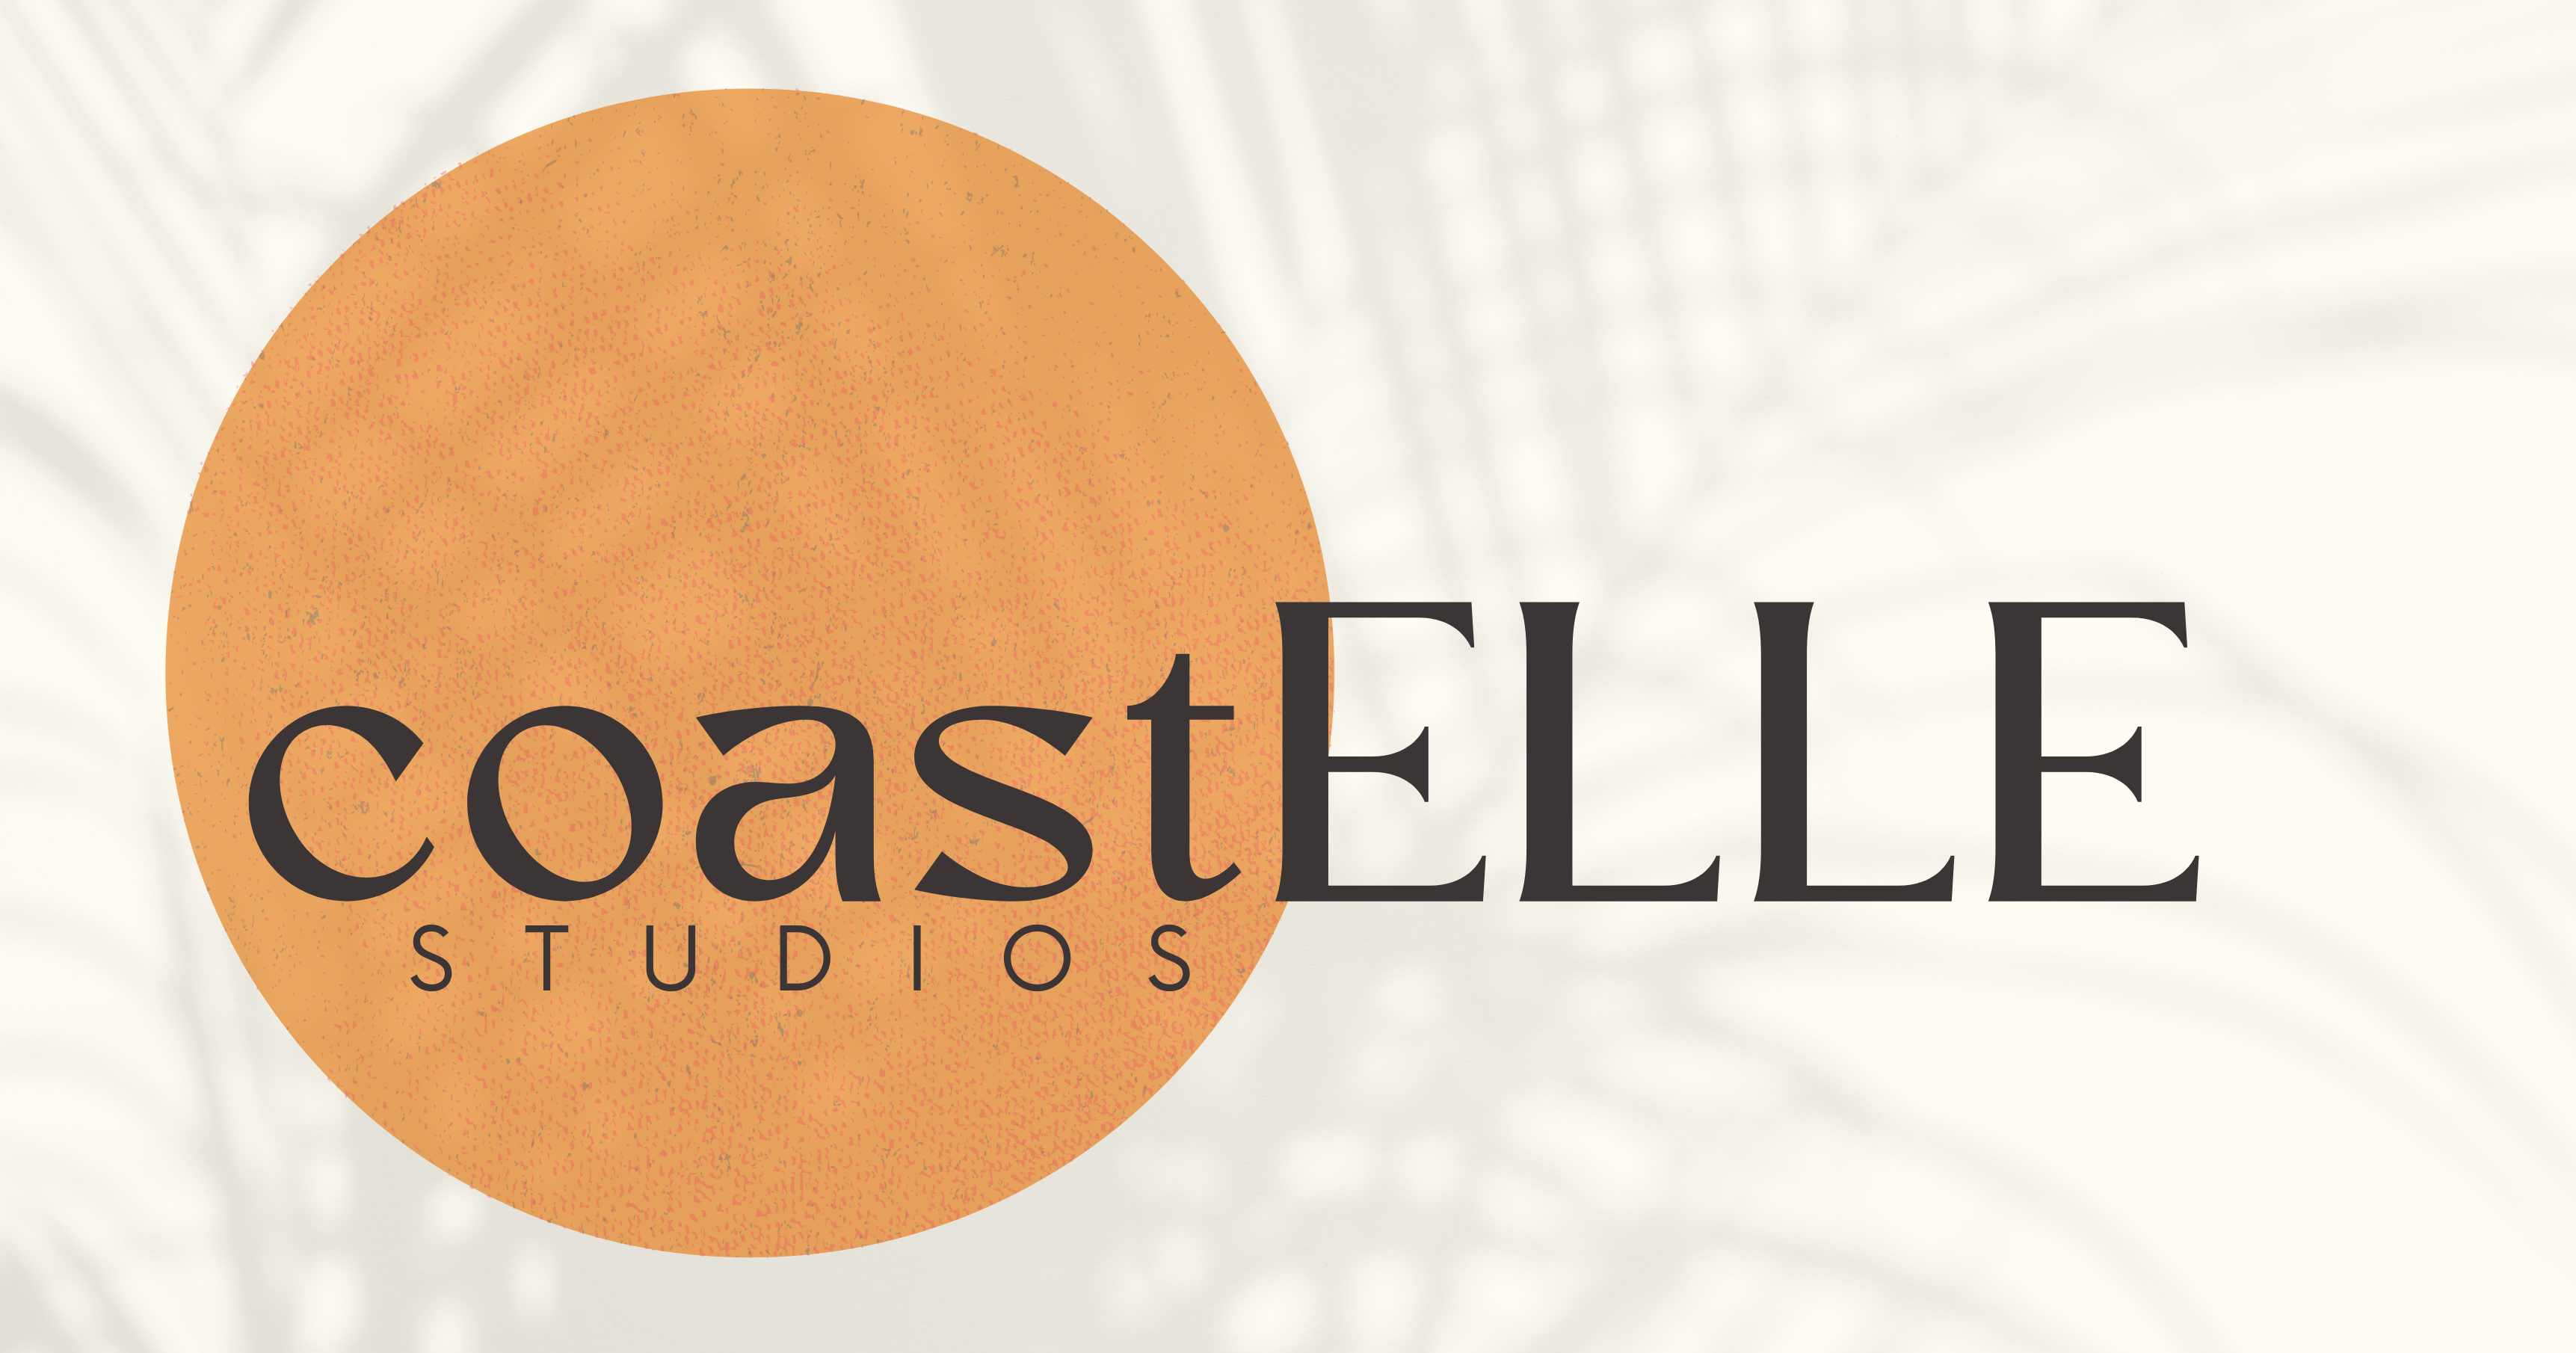 coastELLE studios